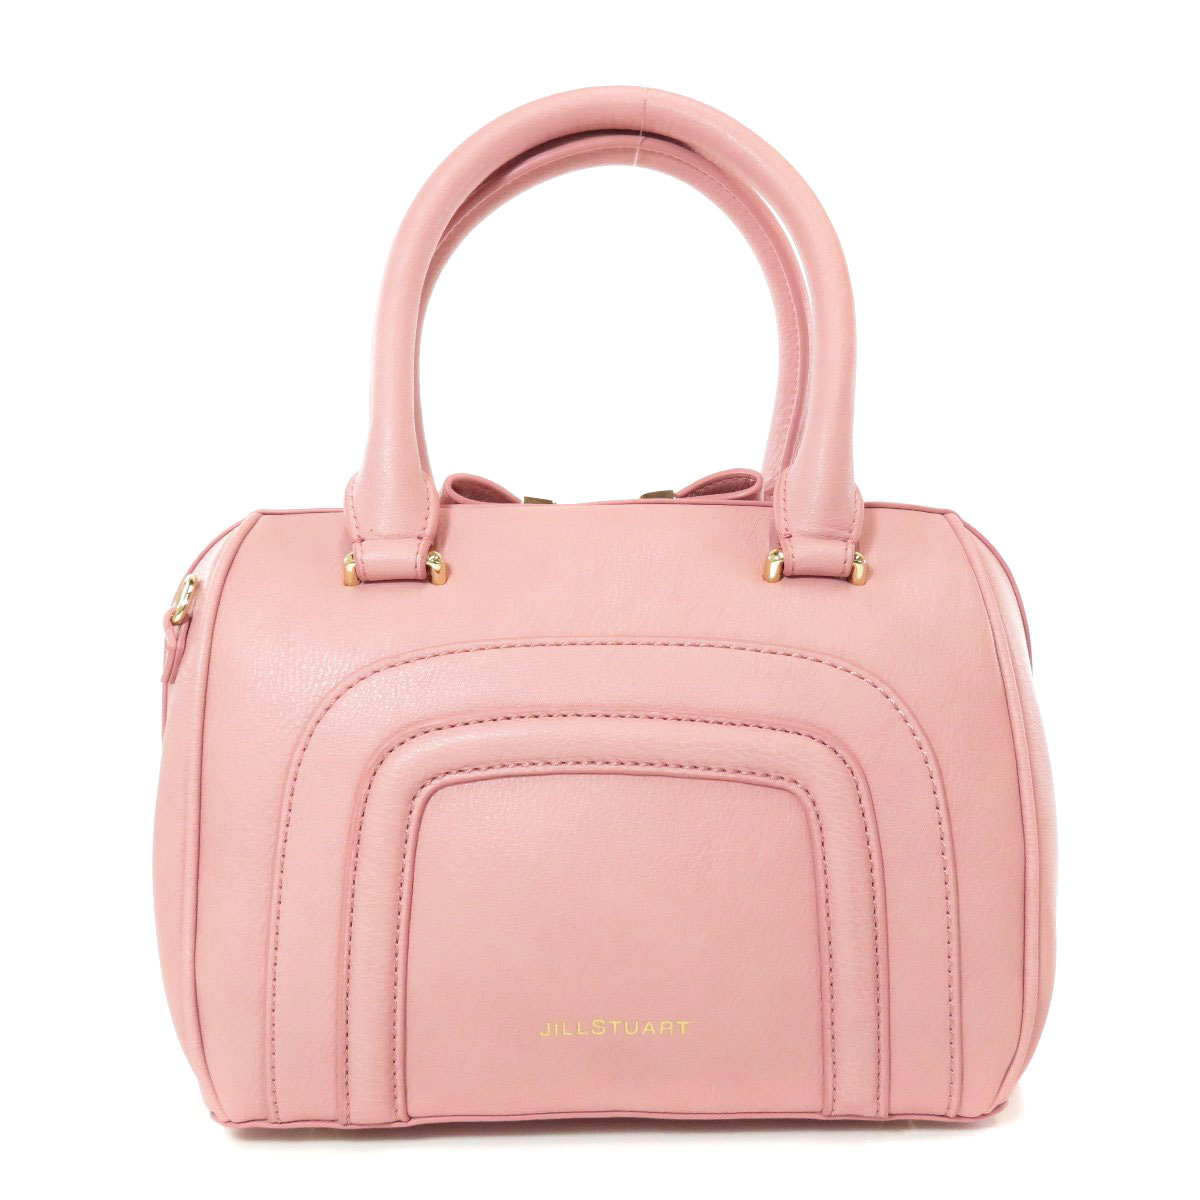 Jill Stuart 2way Bag Handbag Ladies ー The Best Place To Buy Brand Bags Watches Jewelry Bramo